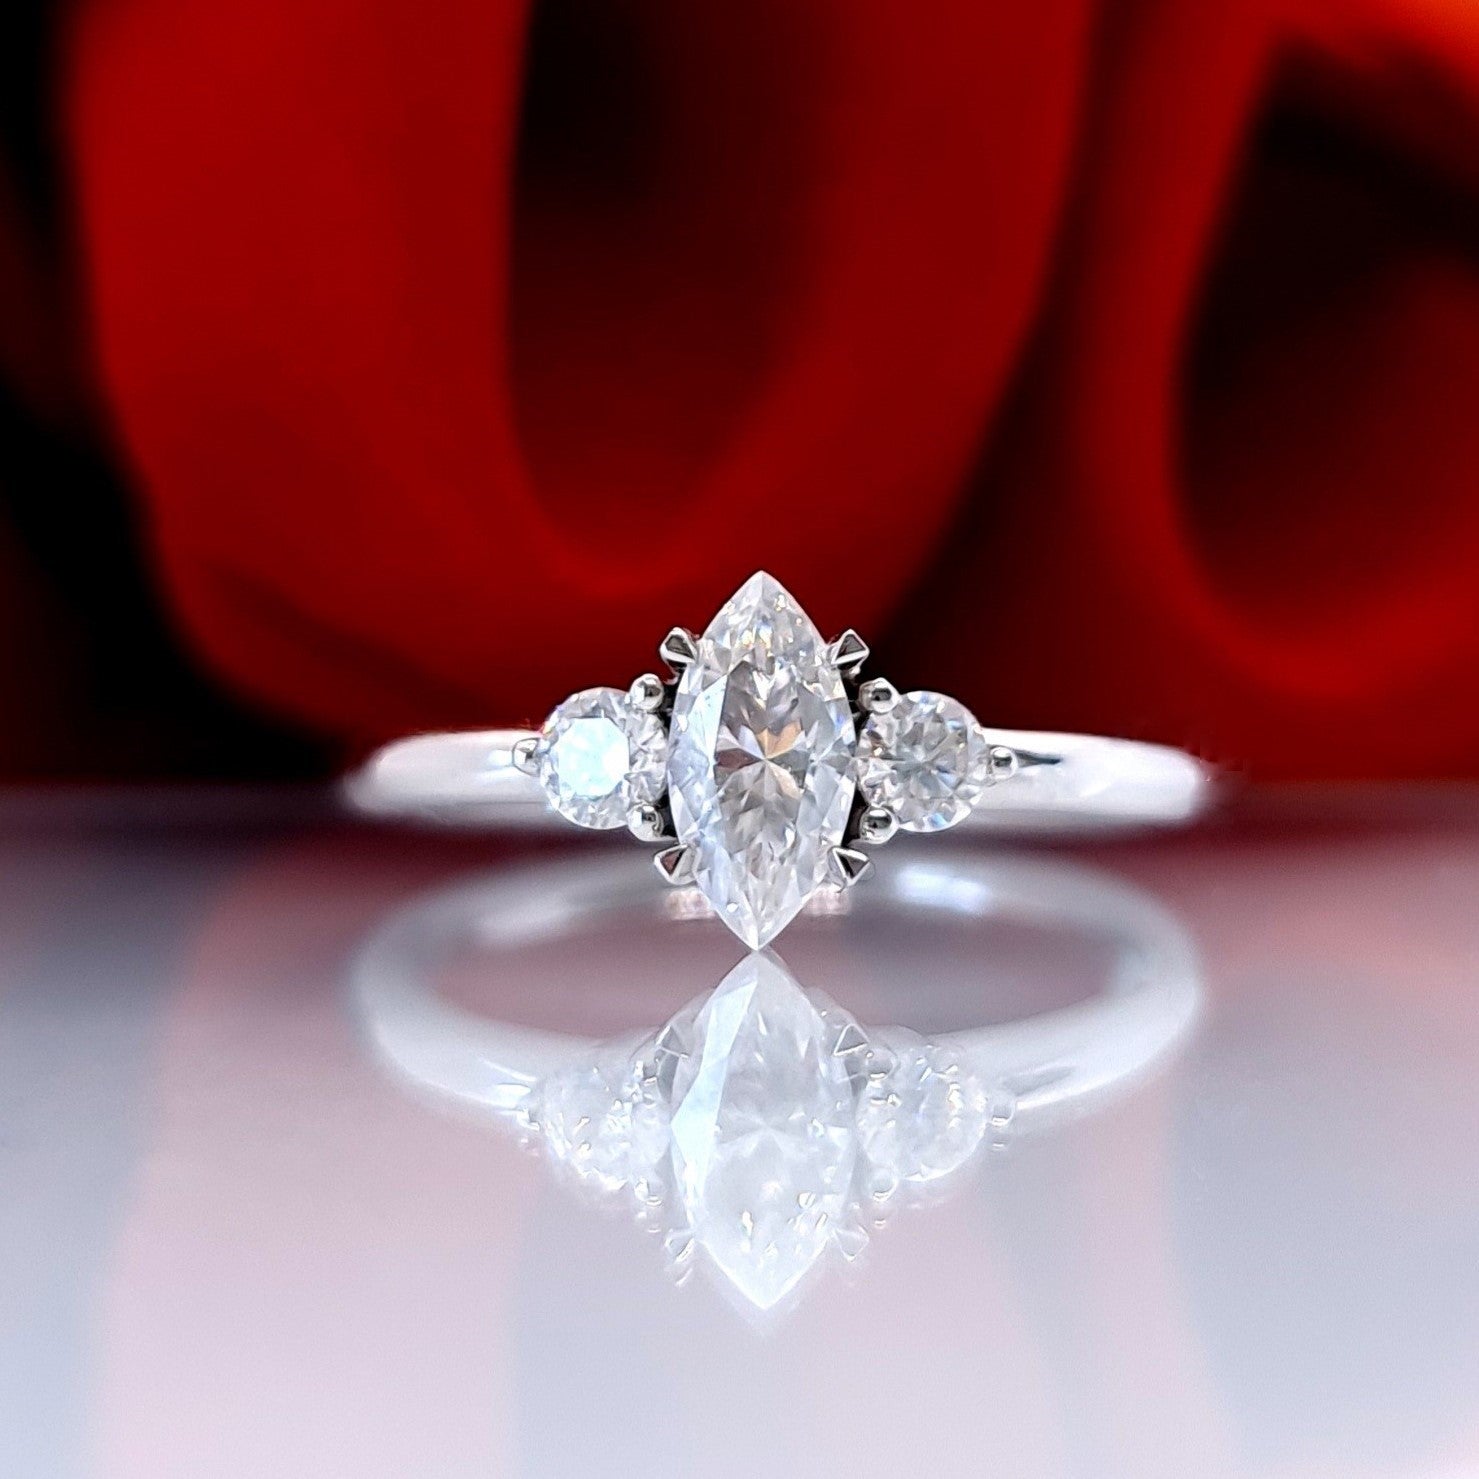 1 carat marquise cut Moissanite Engagement Ring - Sustainable Diamond Alternative Fast next day shipping Sydney Australia Lifetime warranty 